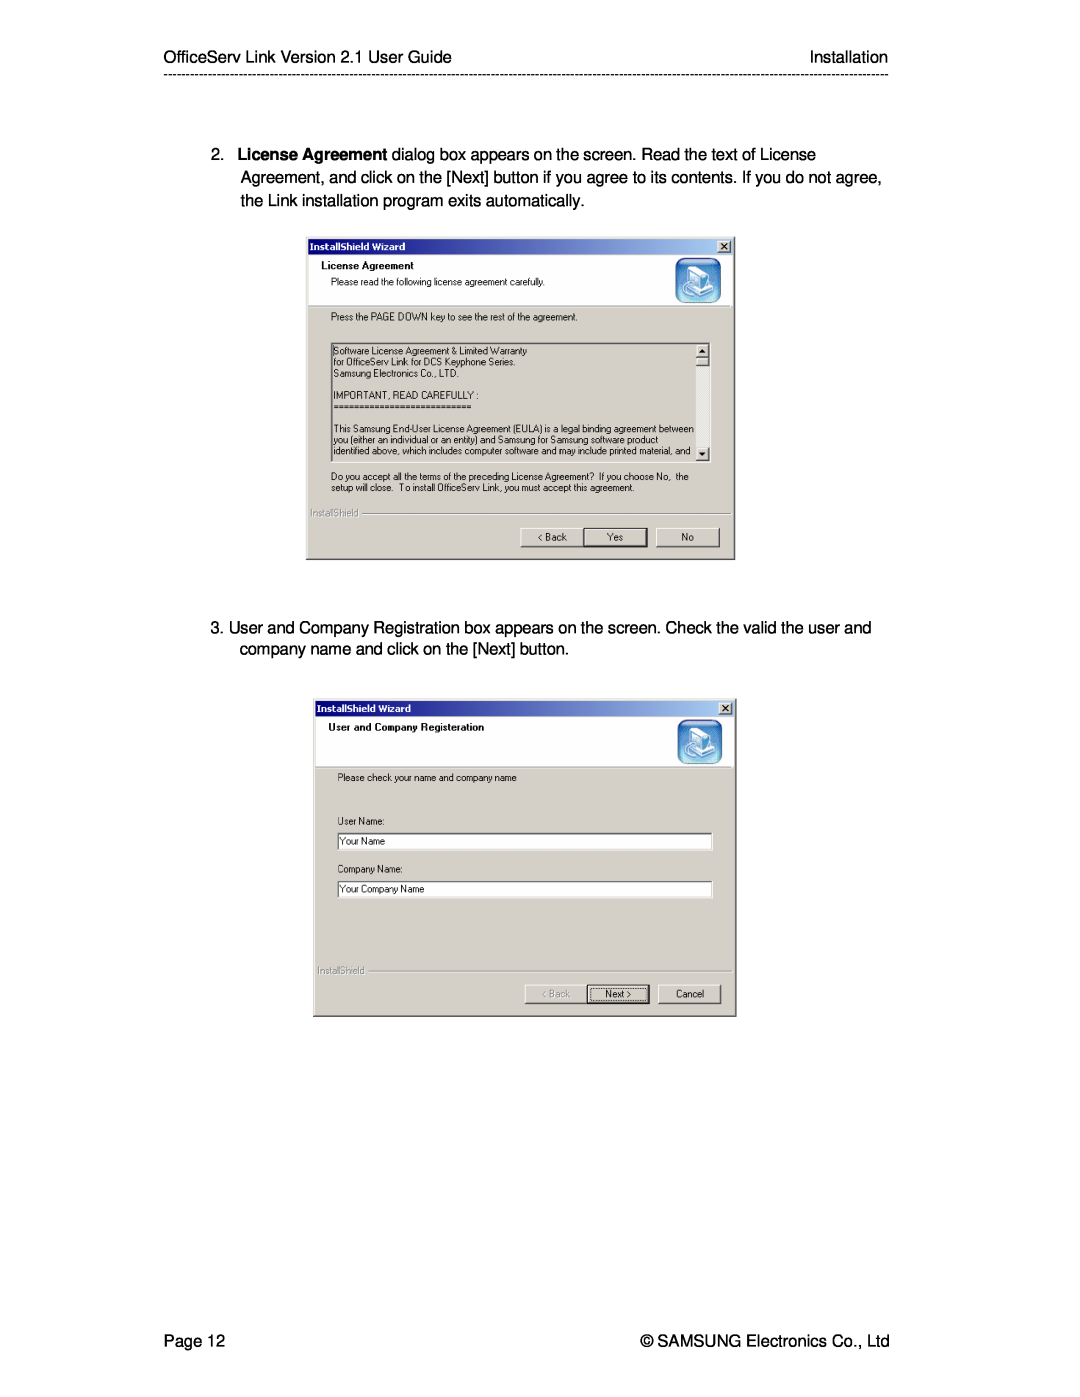 Samsung manual OfficeServ Link Version 2.1 User GuideInstallation, Page 